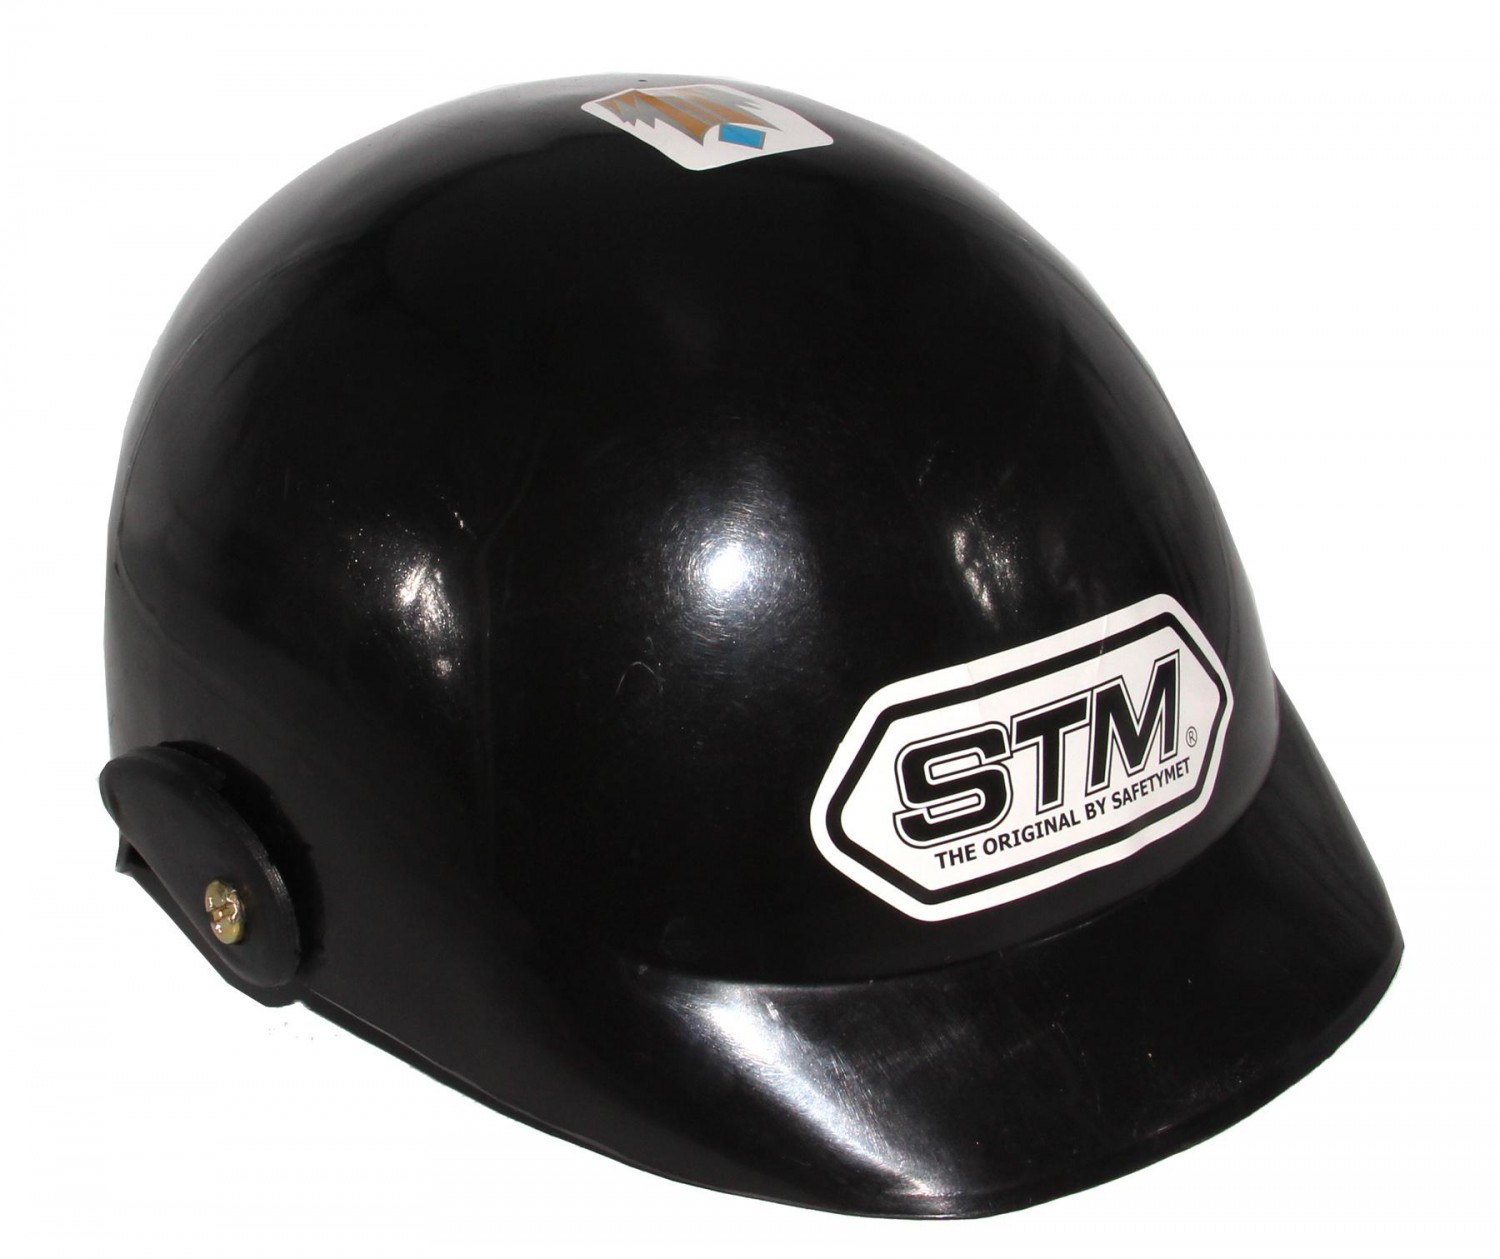 STM Cap Style New Version Bike Helmet Black